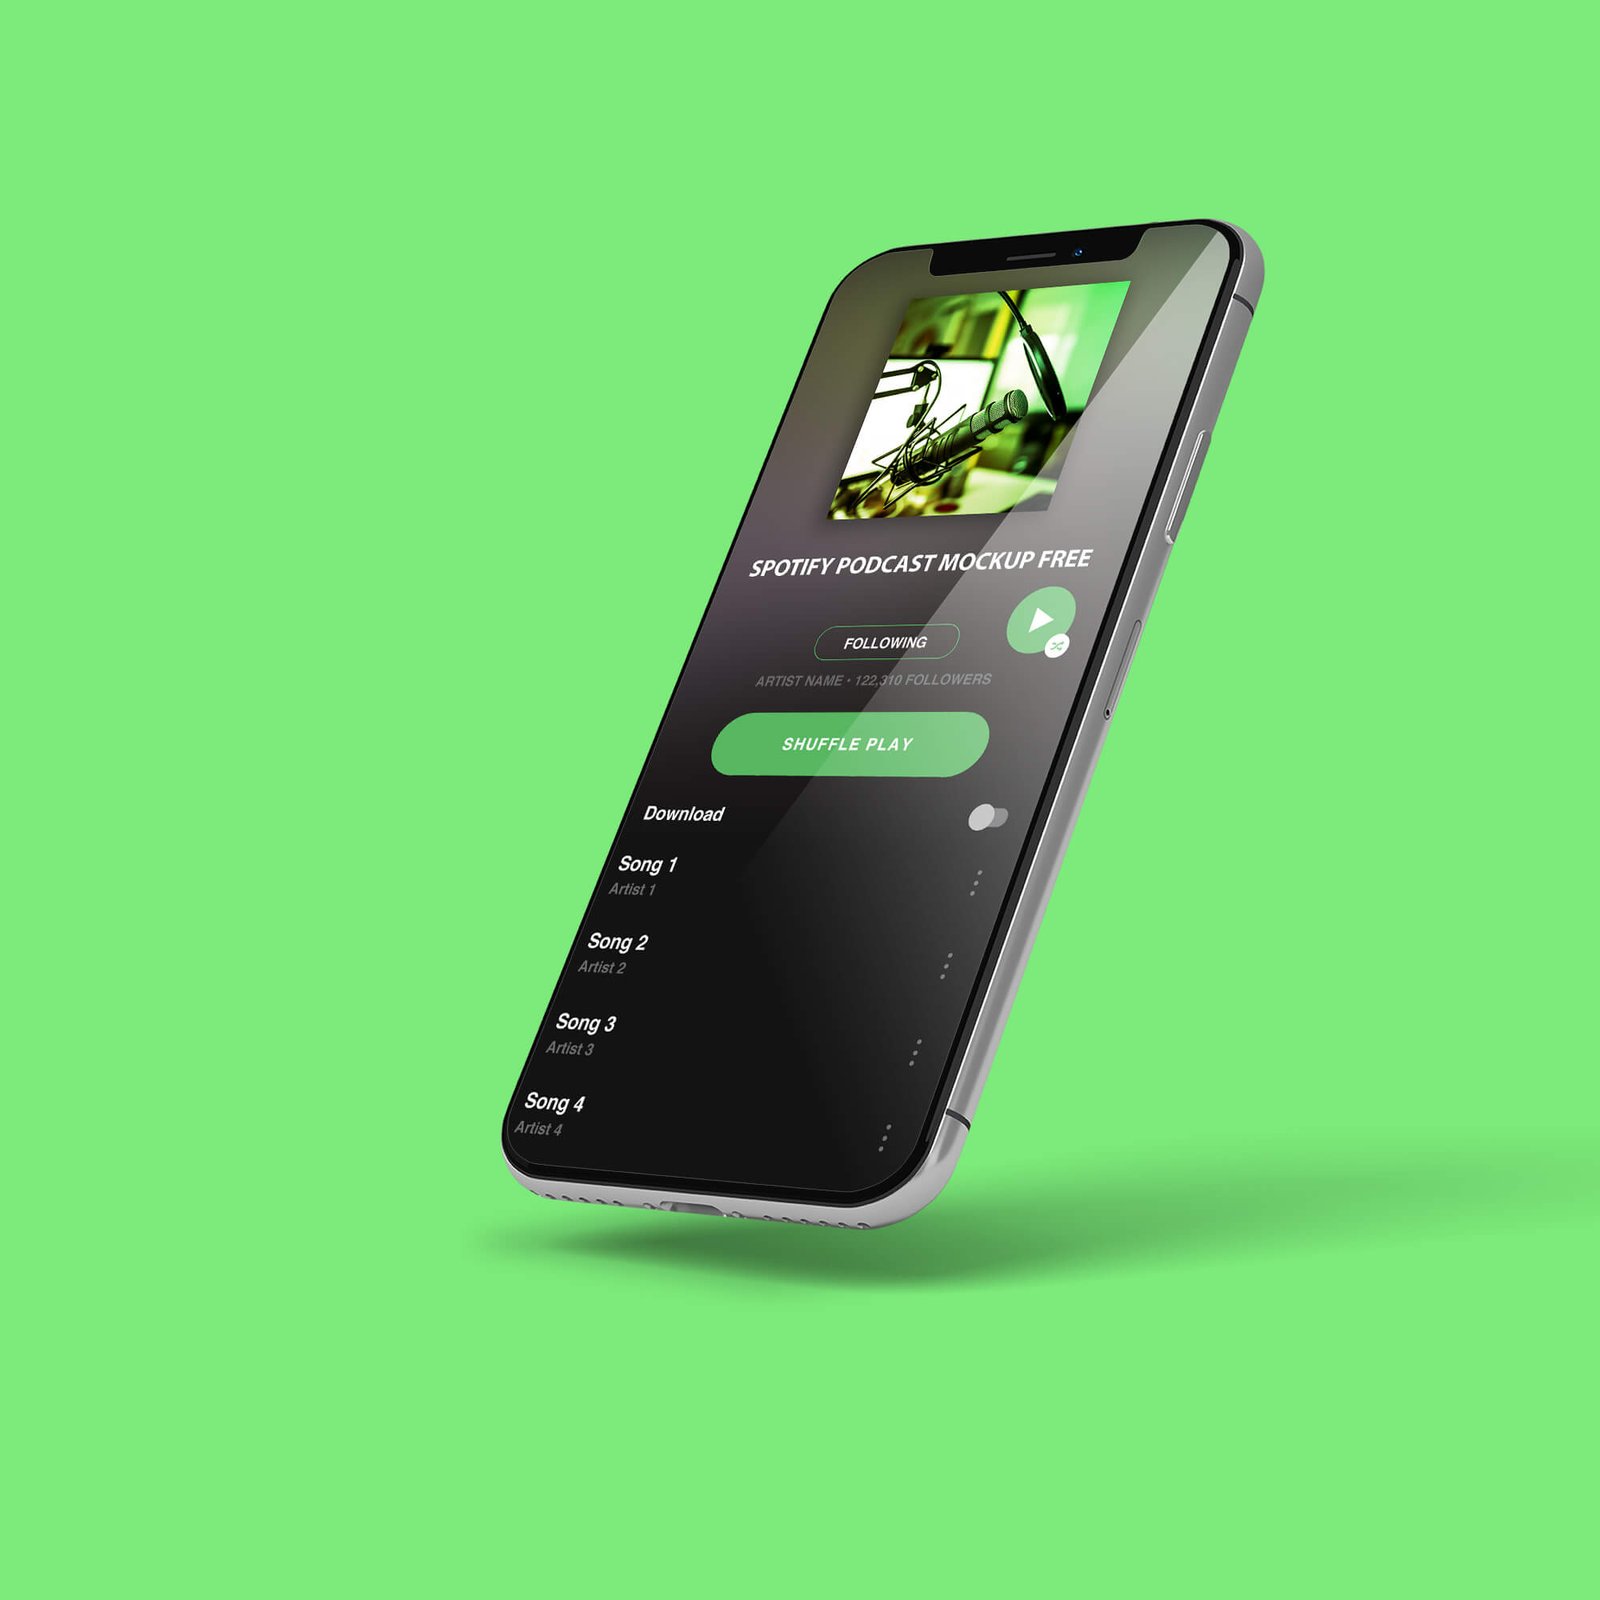 Design Free Spotify Podcast Mockup PSD Template